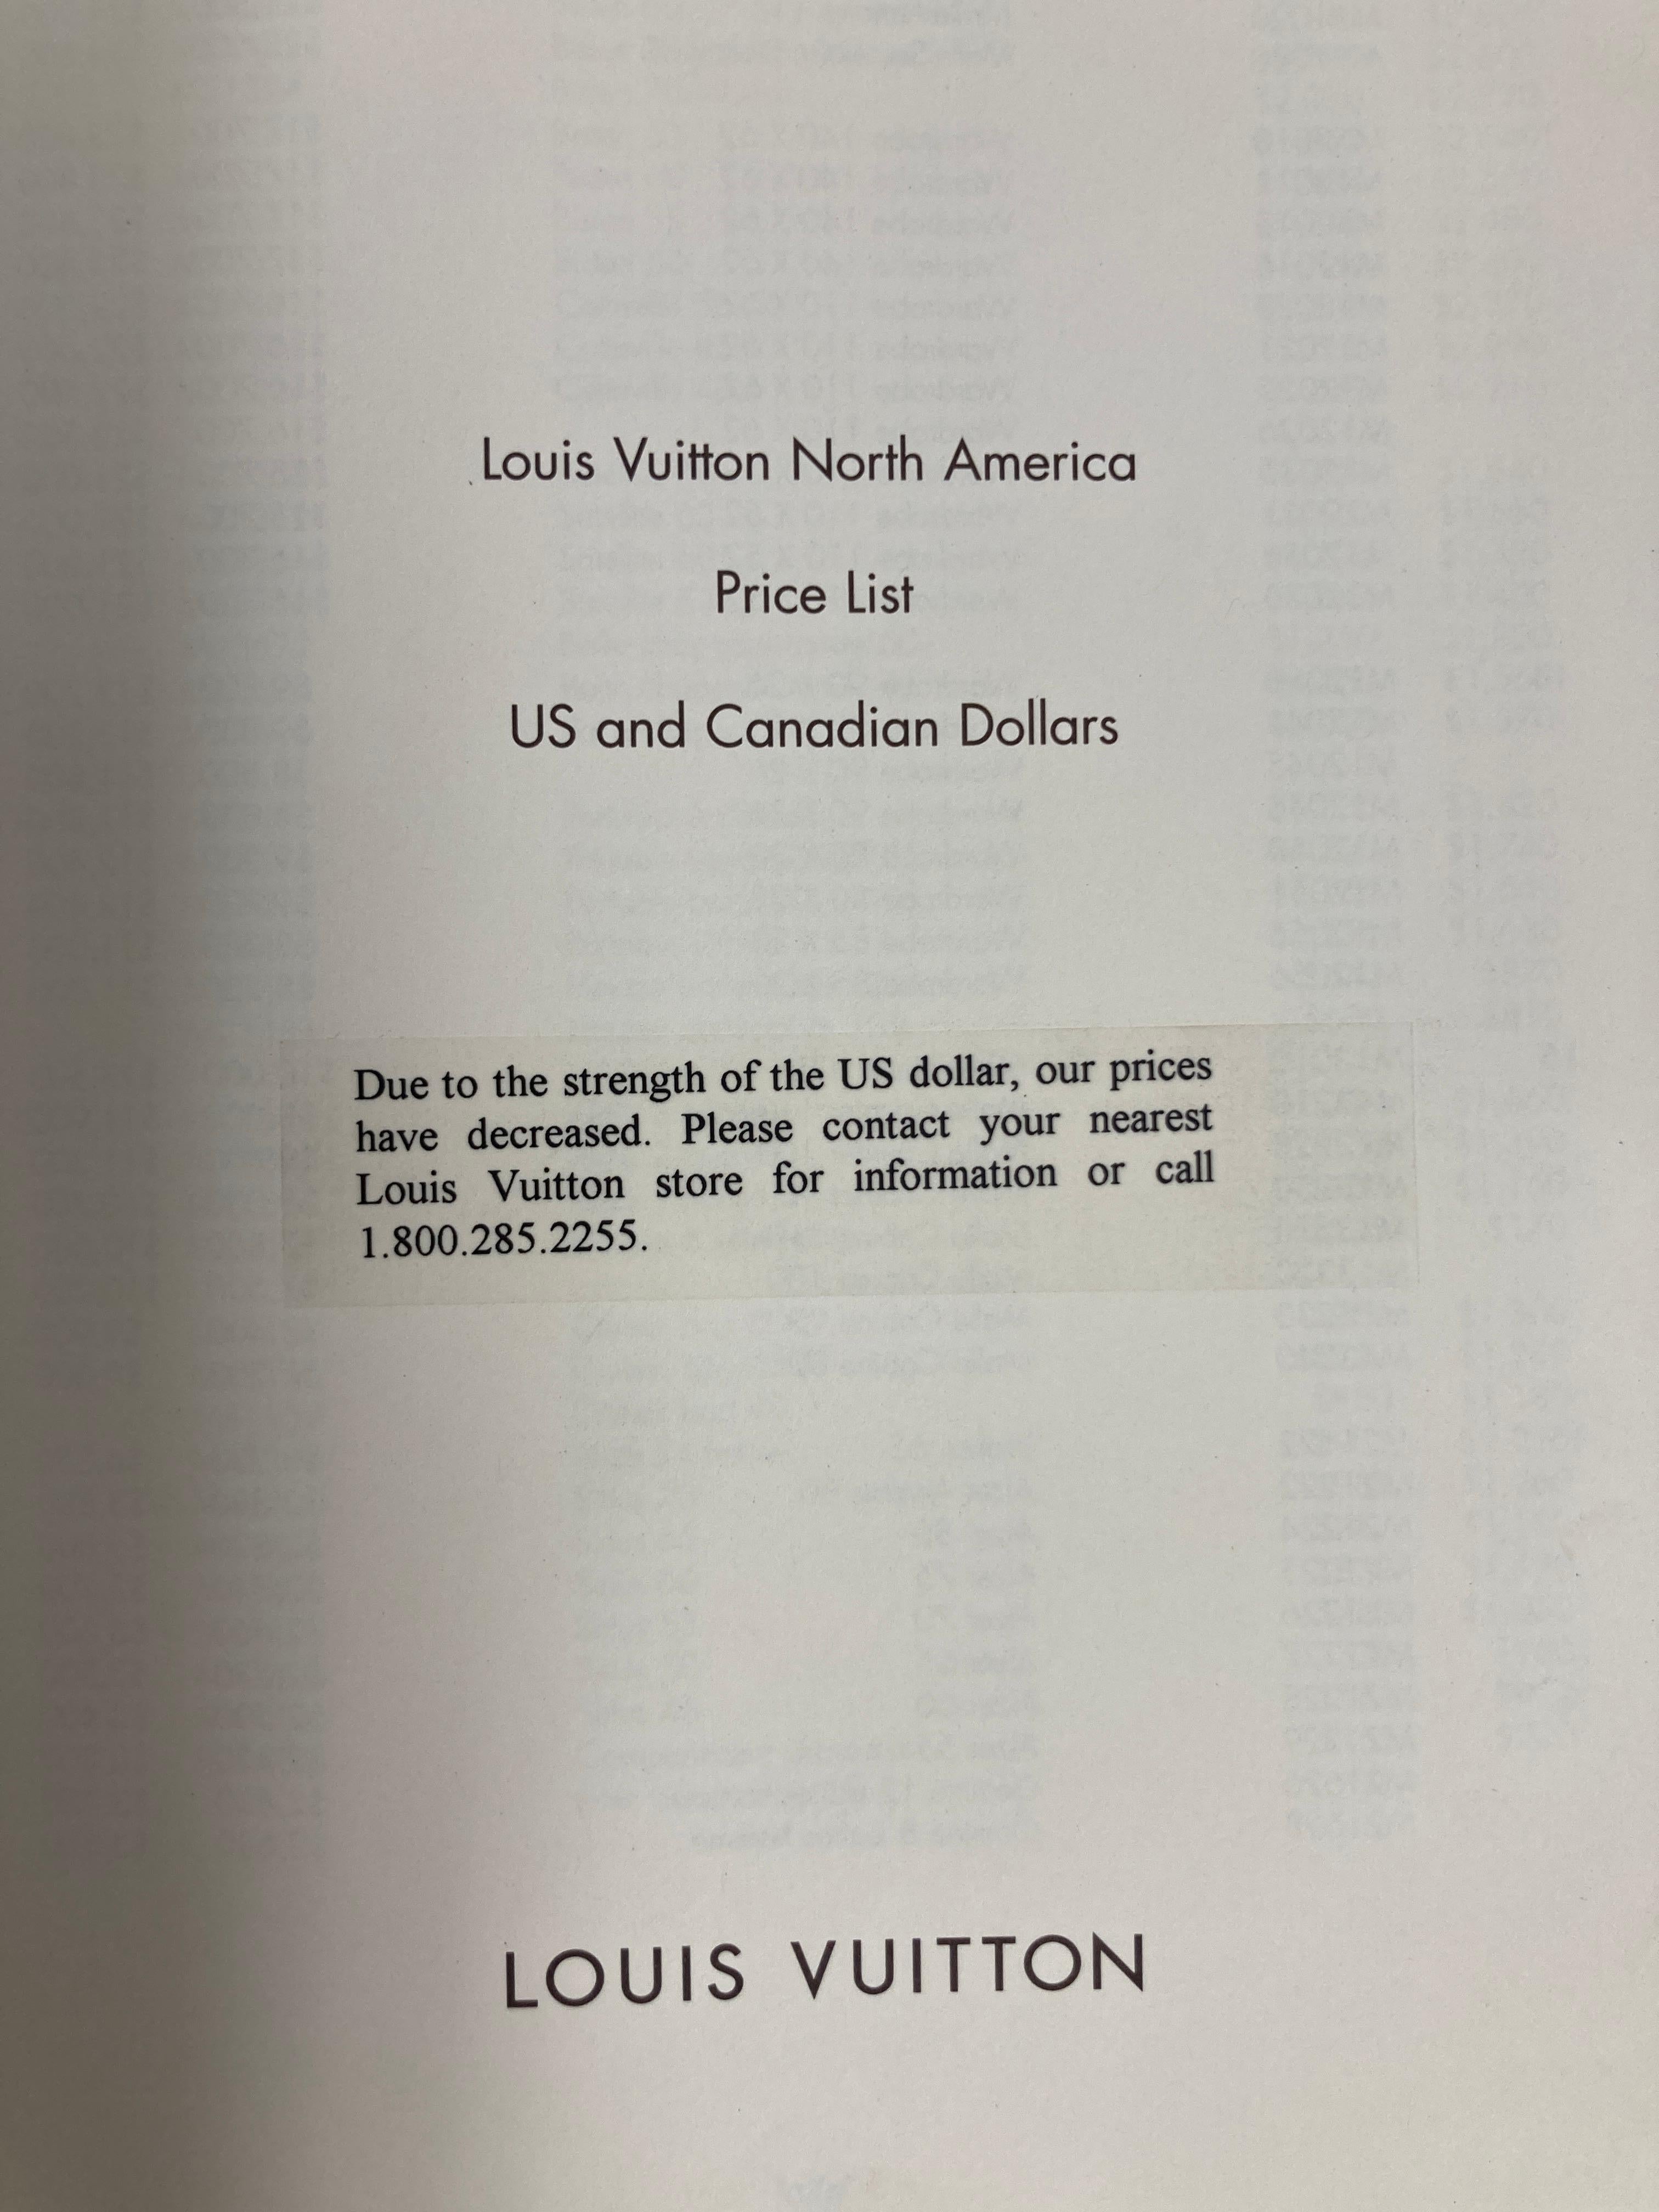 Louis Vuitton Le Catalogue Reference Book 1997 For Sale 1